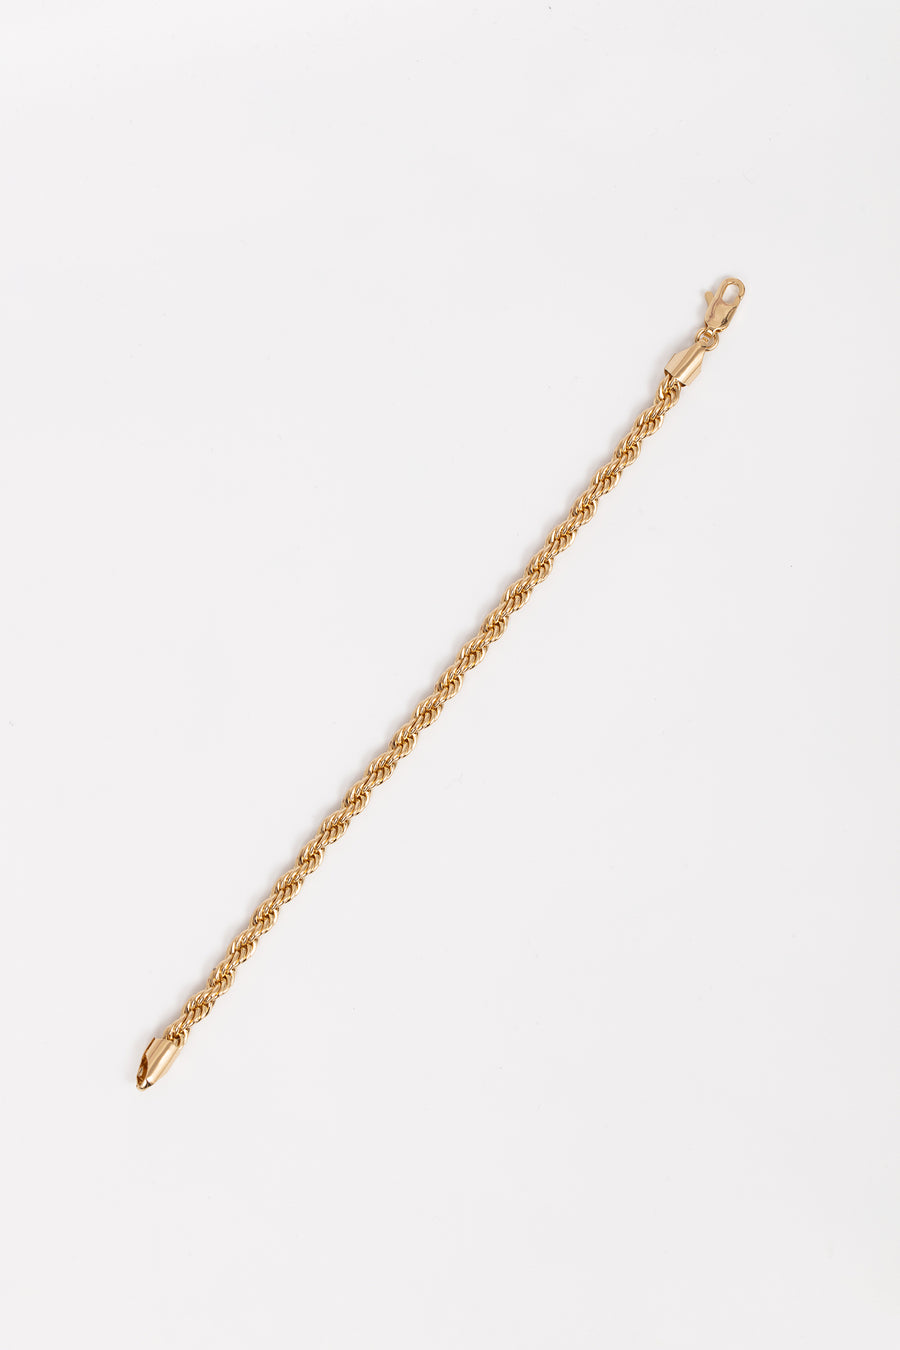 Gold Rope Bracelet, 6pcs